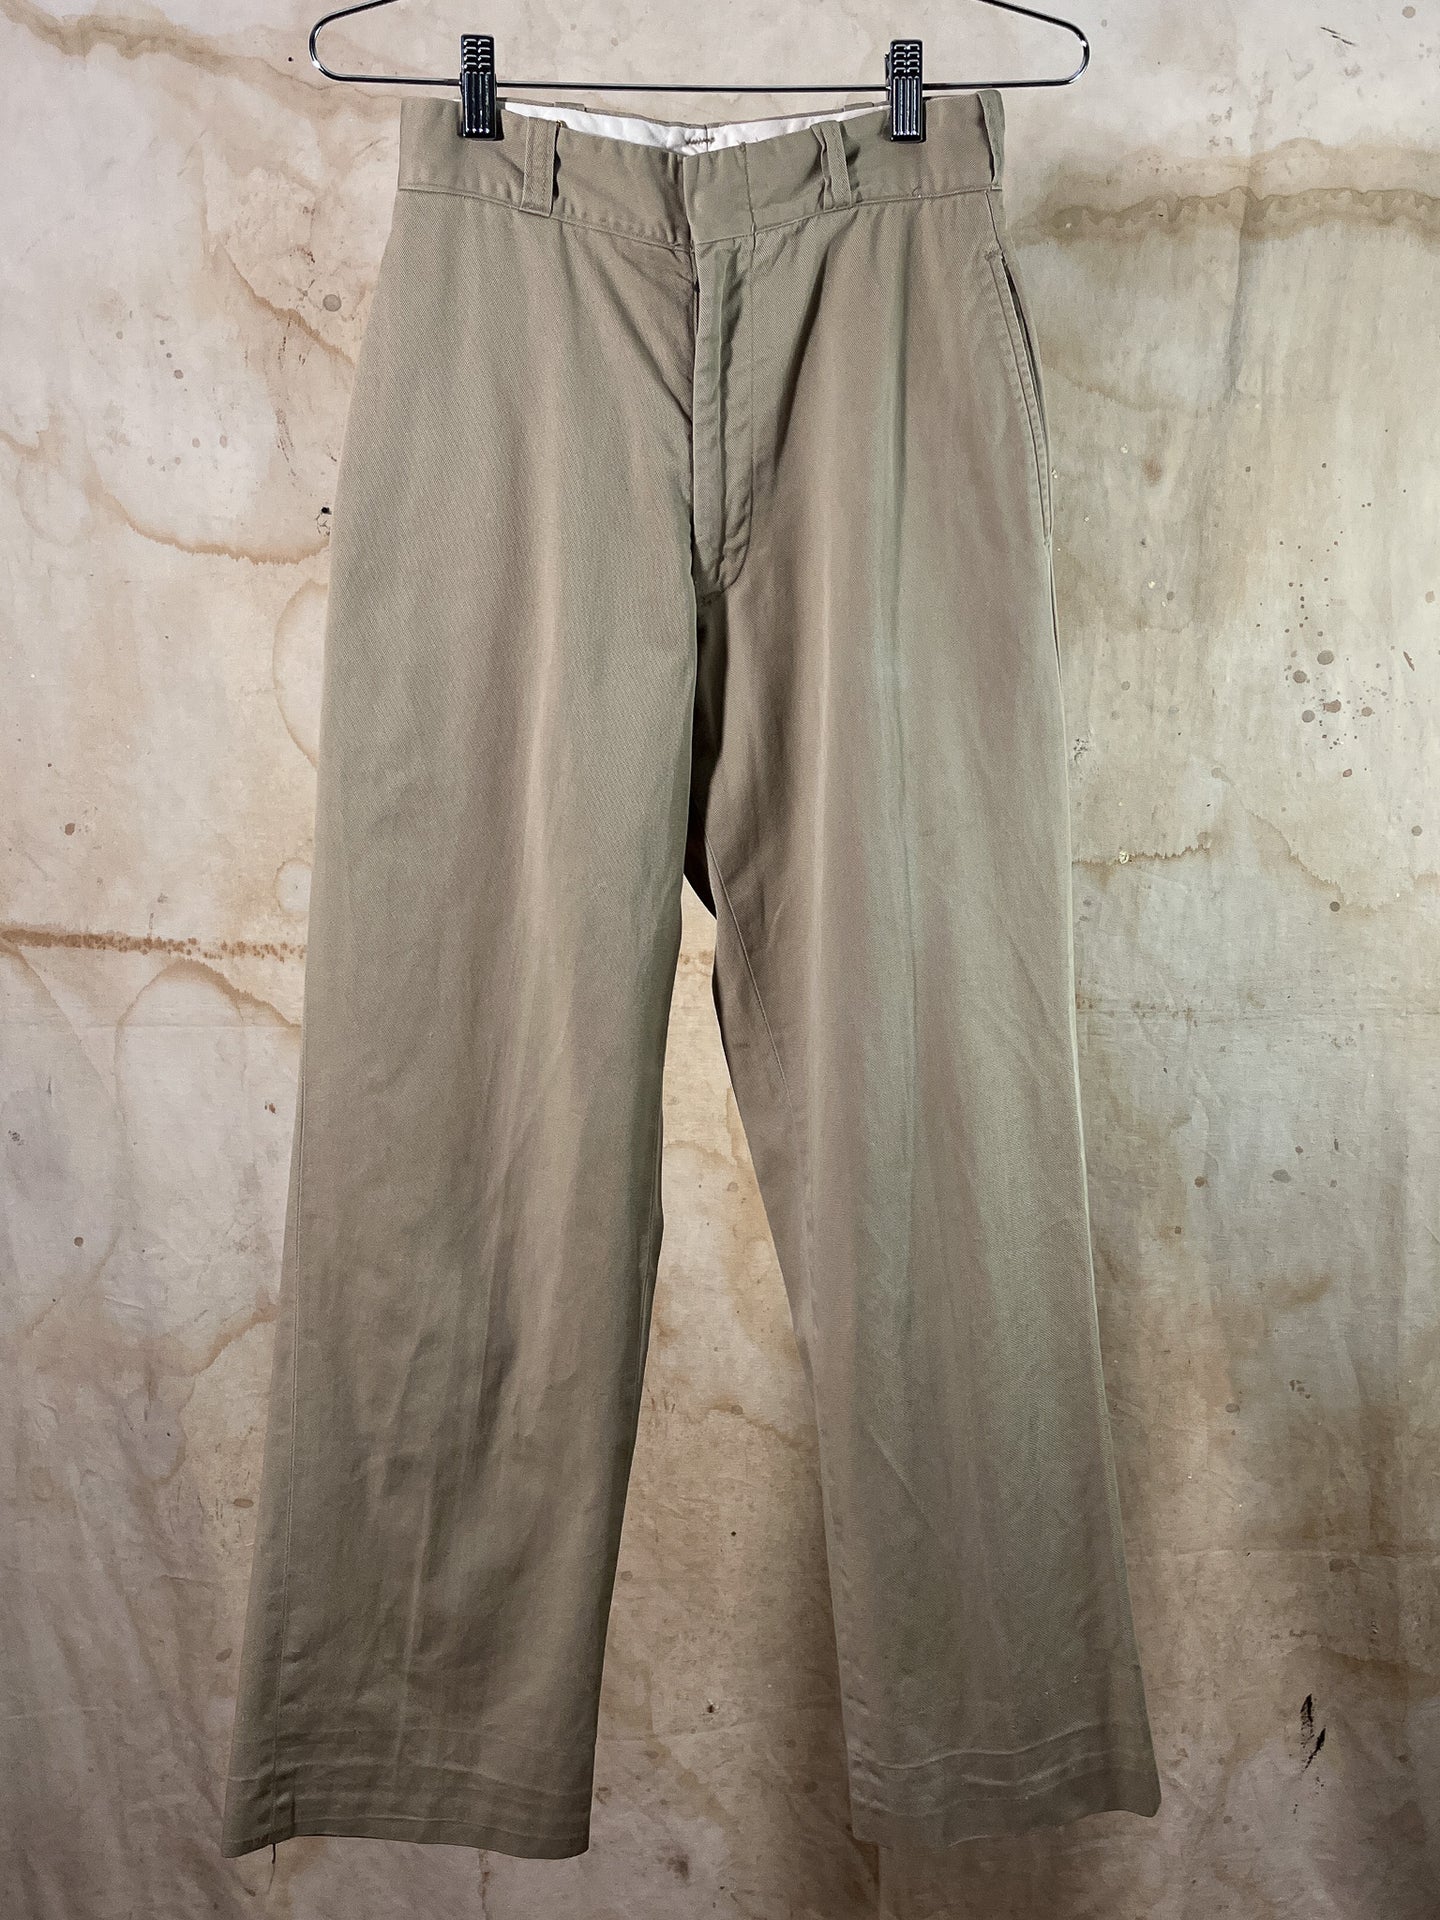 US Army Cotton Khaki Trousers - 1971